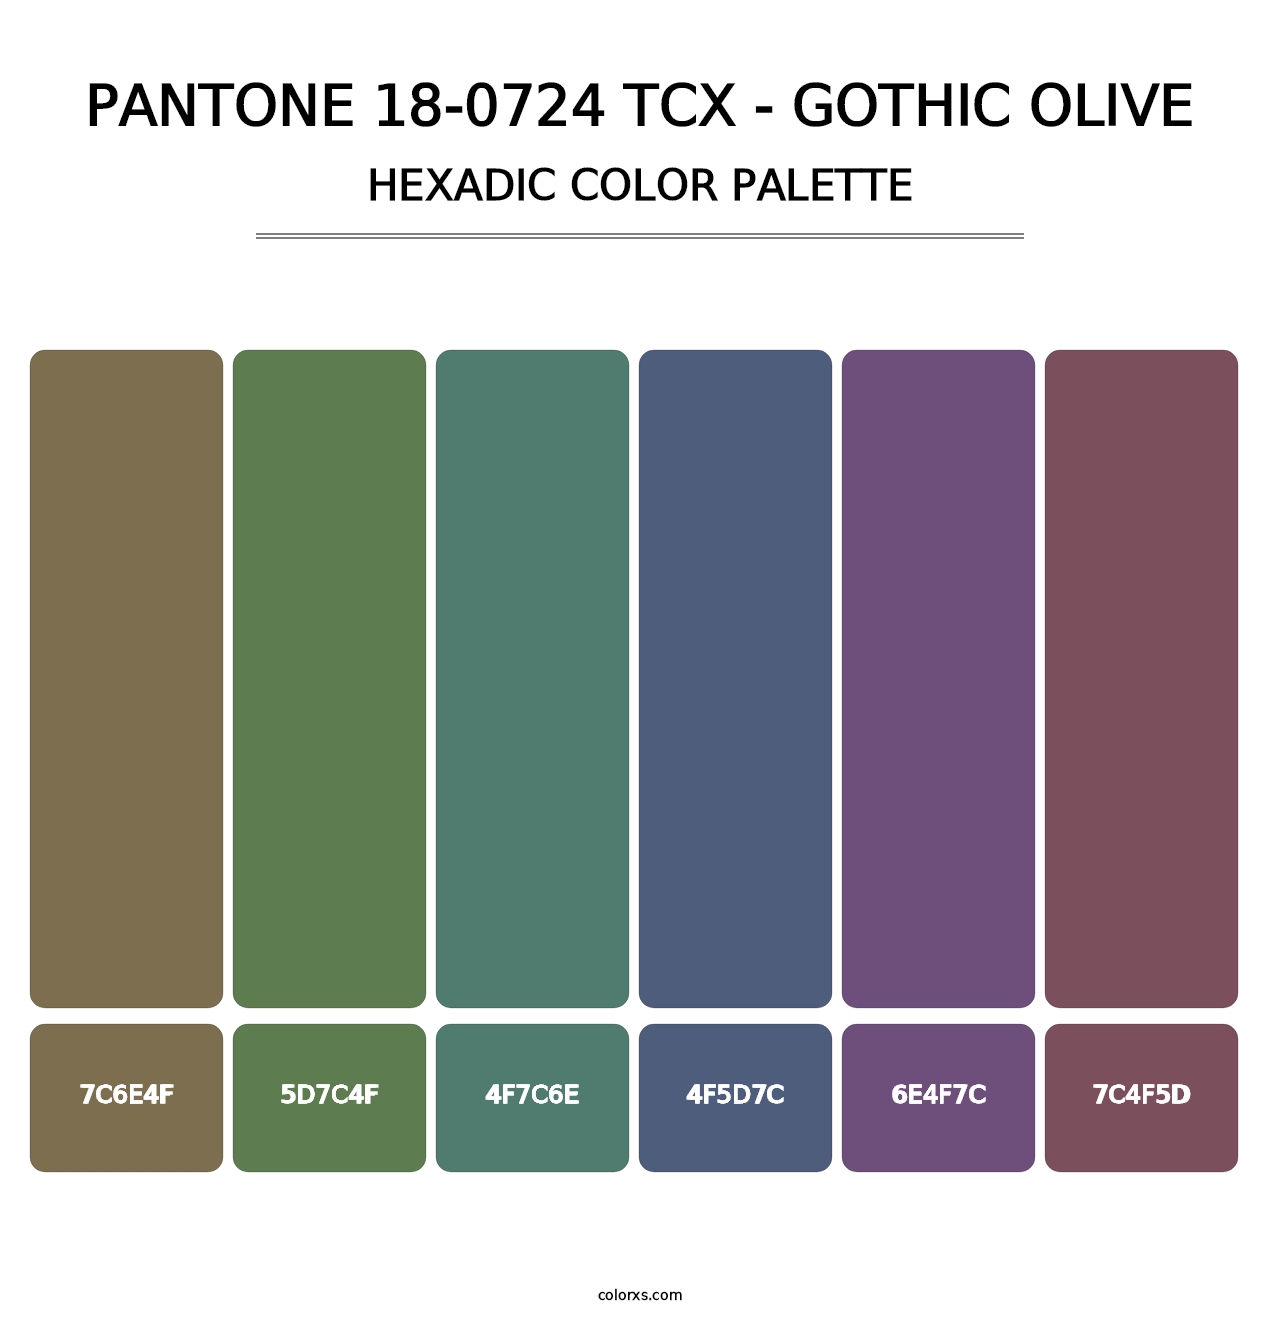 PANTONE 18-0724 TCX - Gothic Olive - Hexadic Color Palette